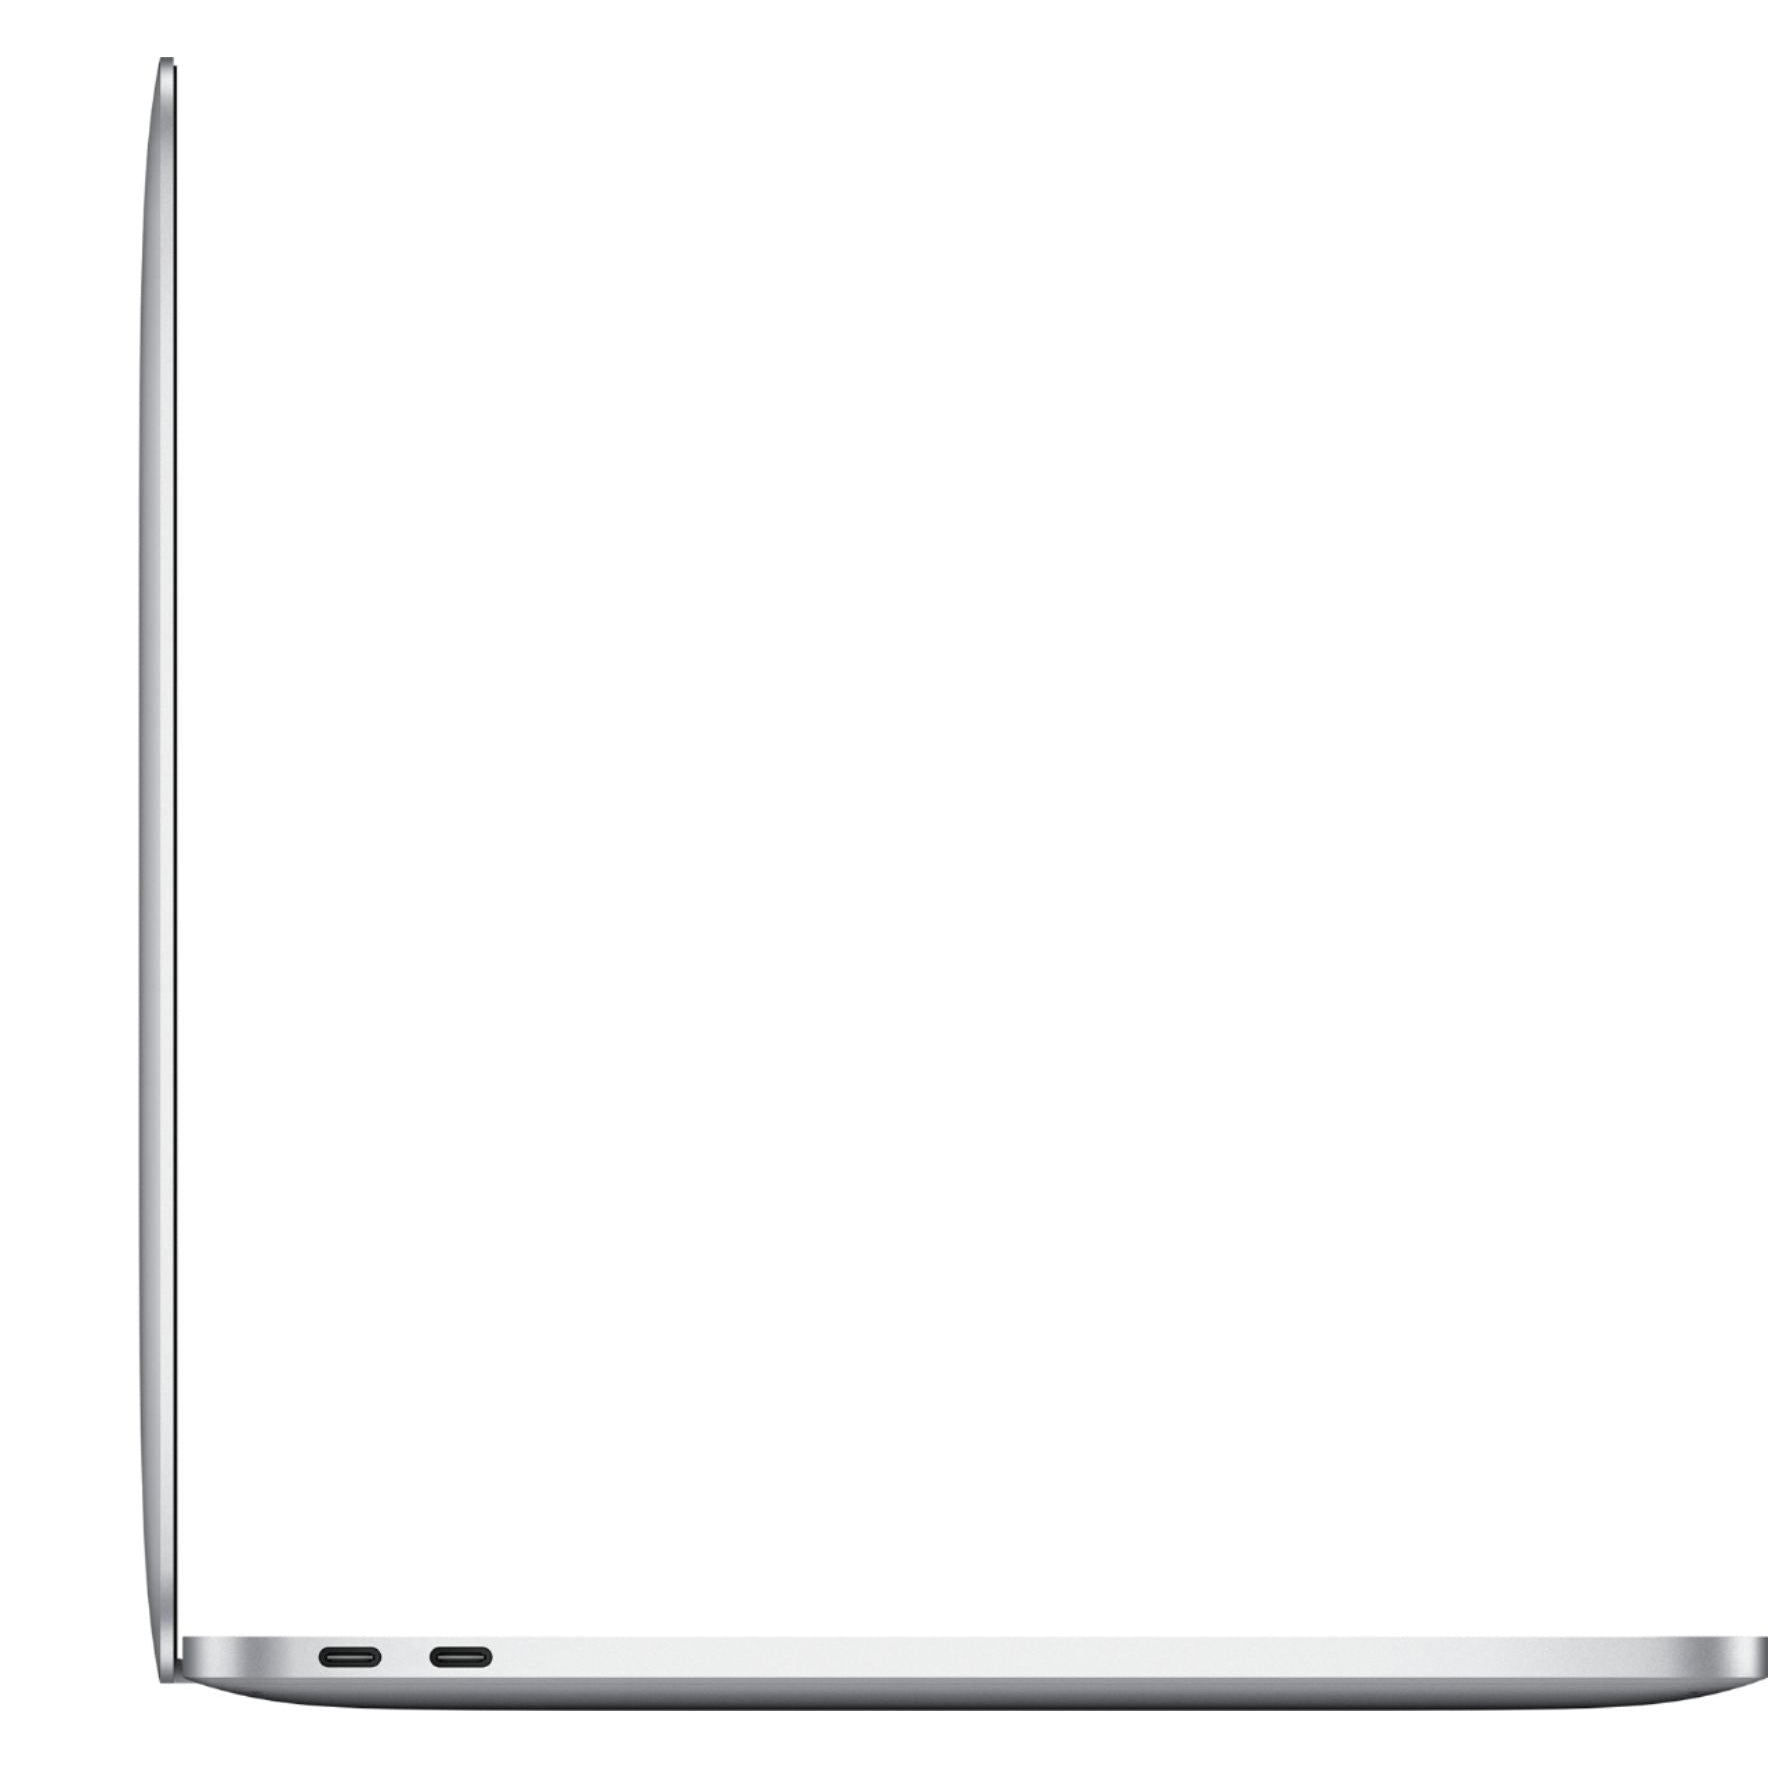 Apple MacBook Pro 13.3'' MPXQ2LL/A (2017) Laptop, Intel Core i5, 8GB RAM, 128GB, Space Grey - Refurbished Pristine